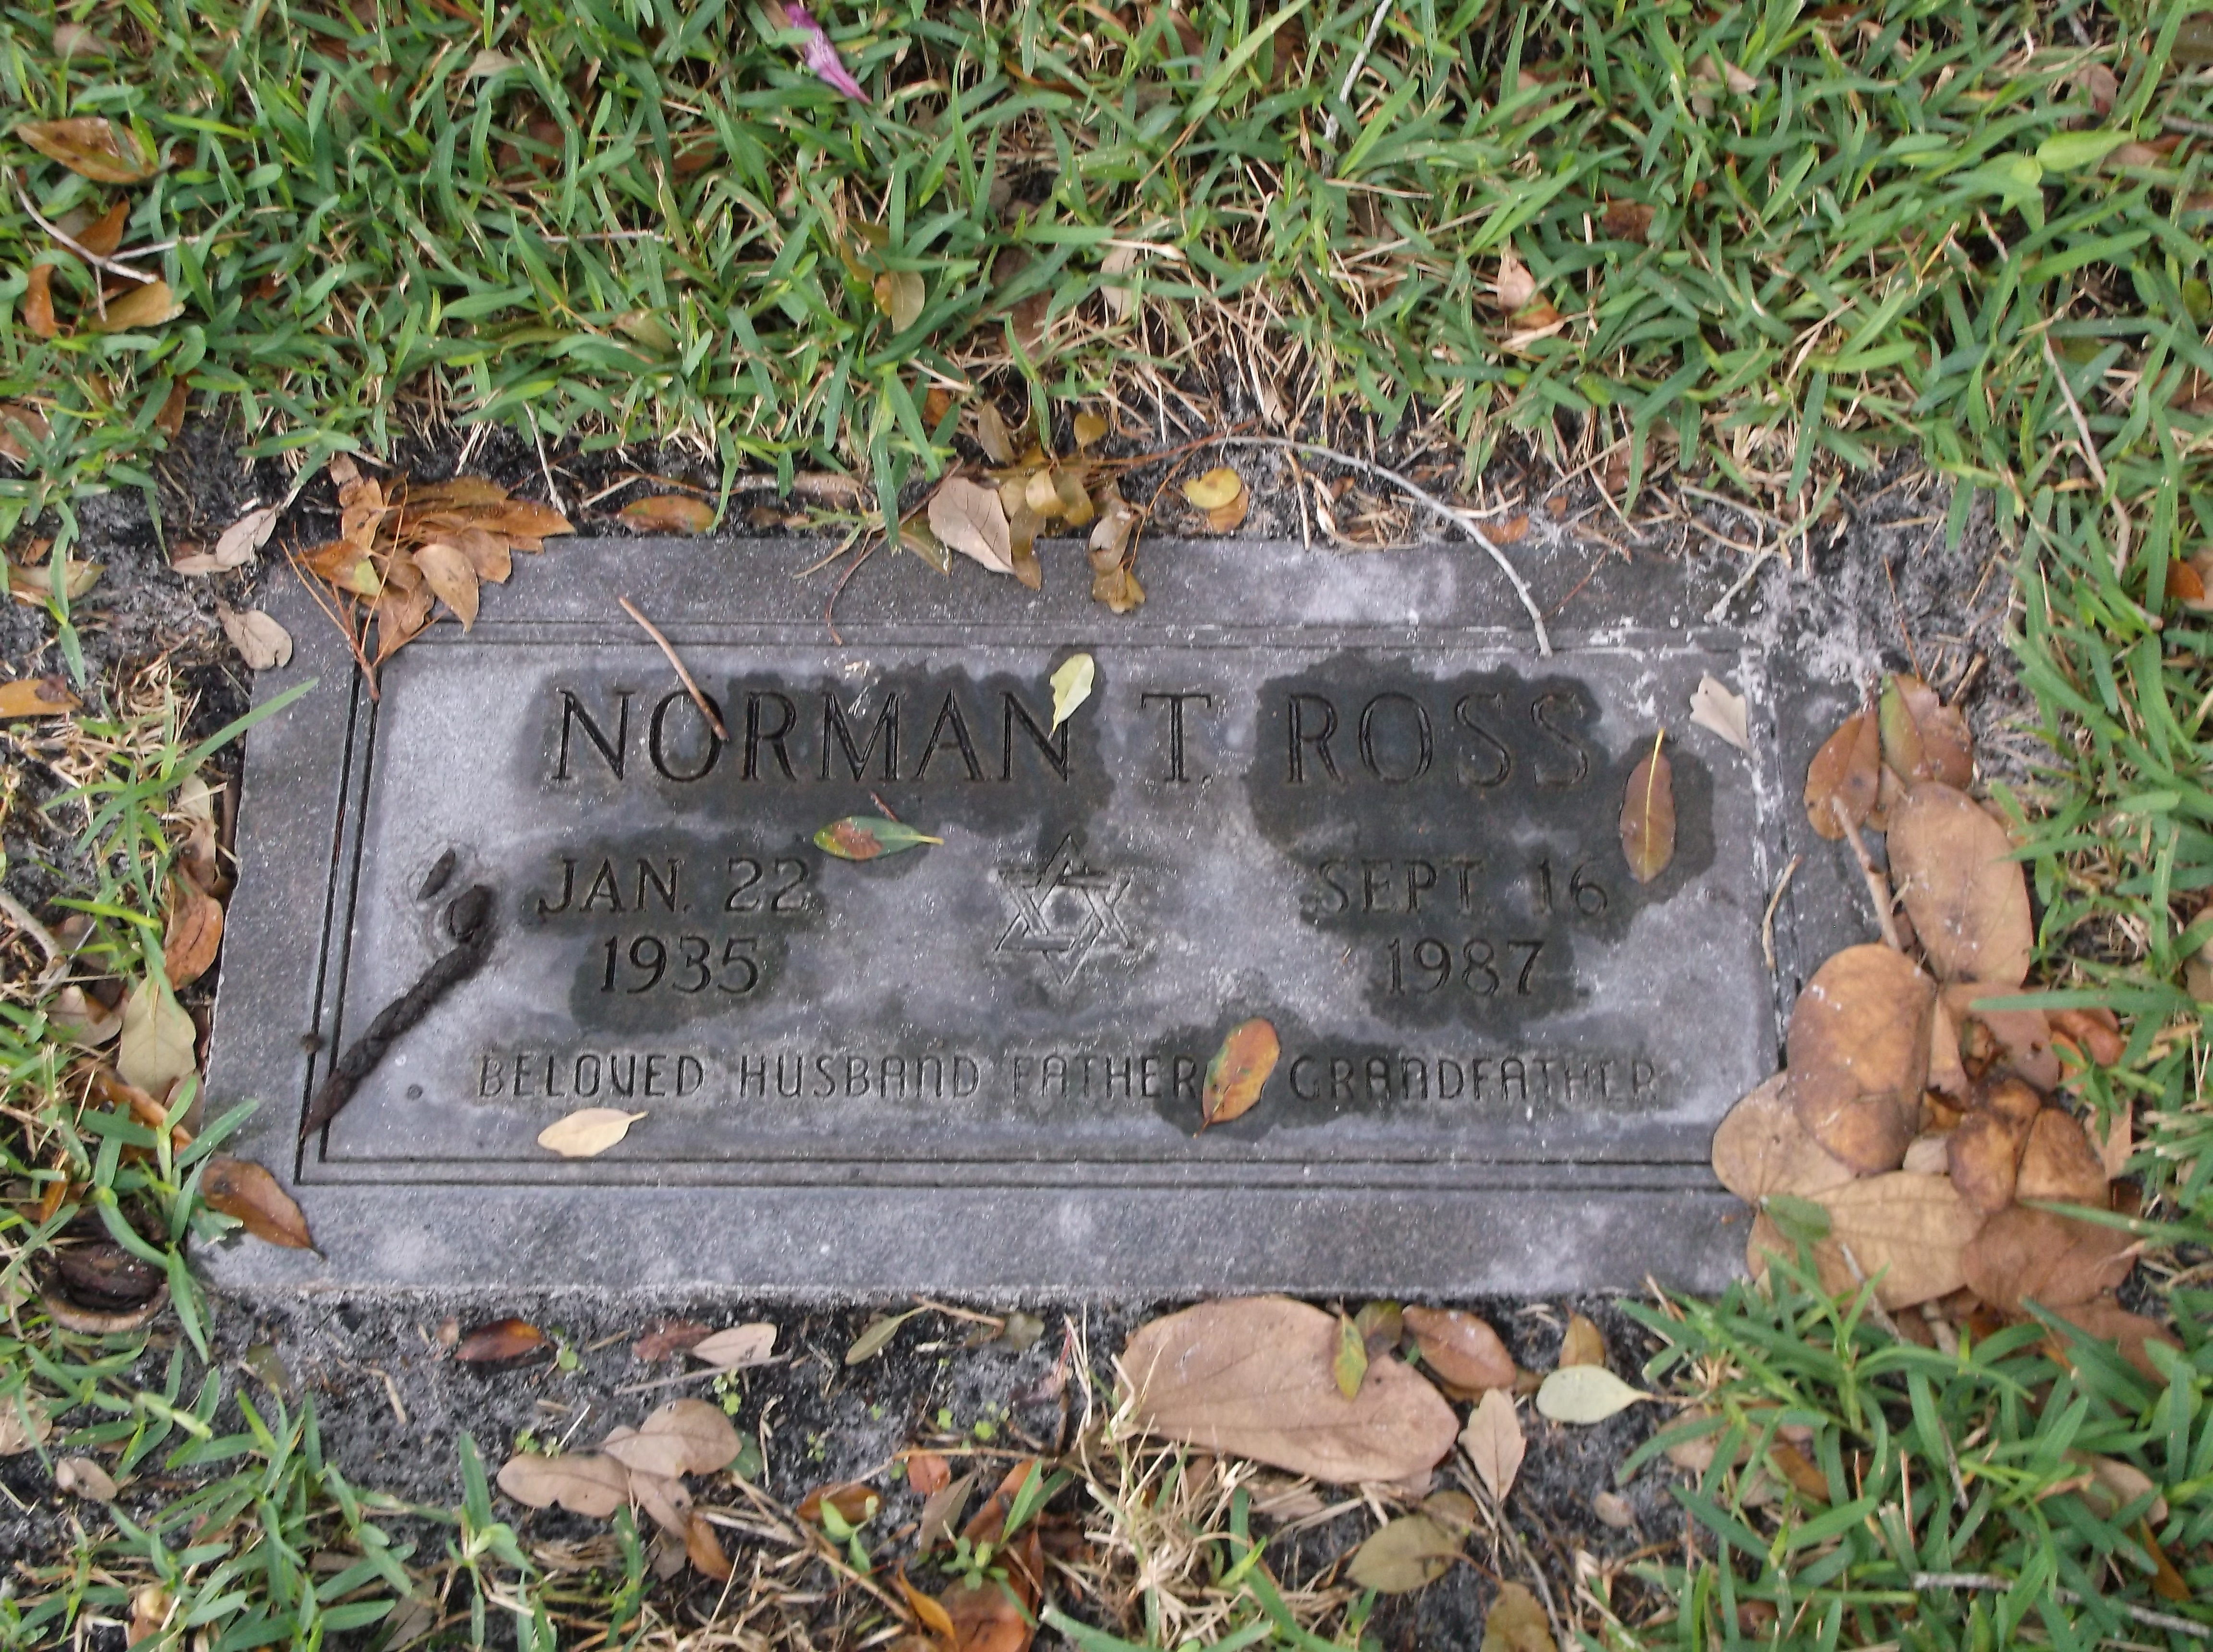 Norman T Ross